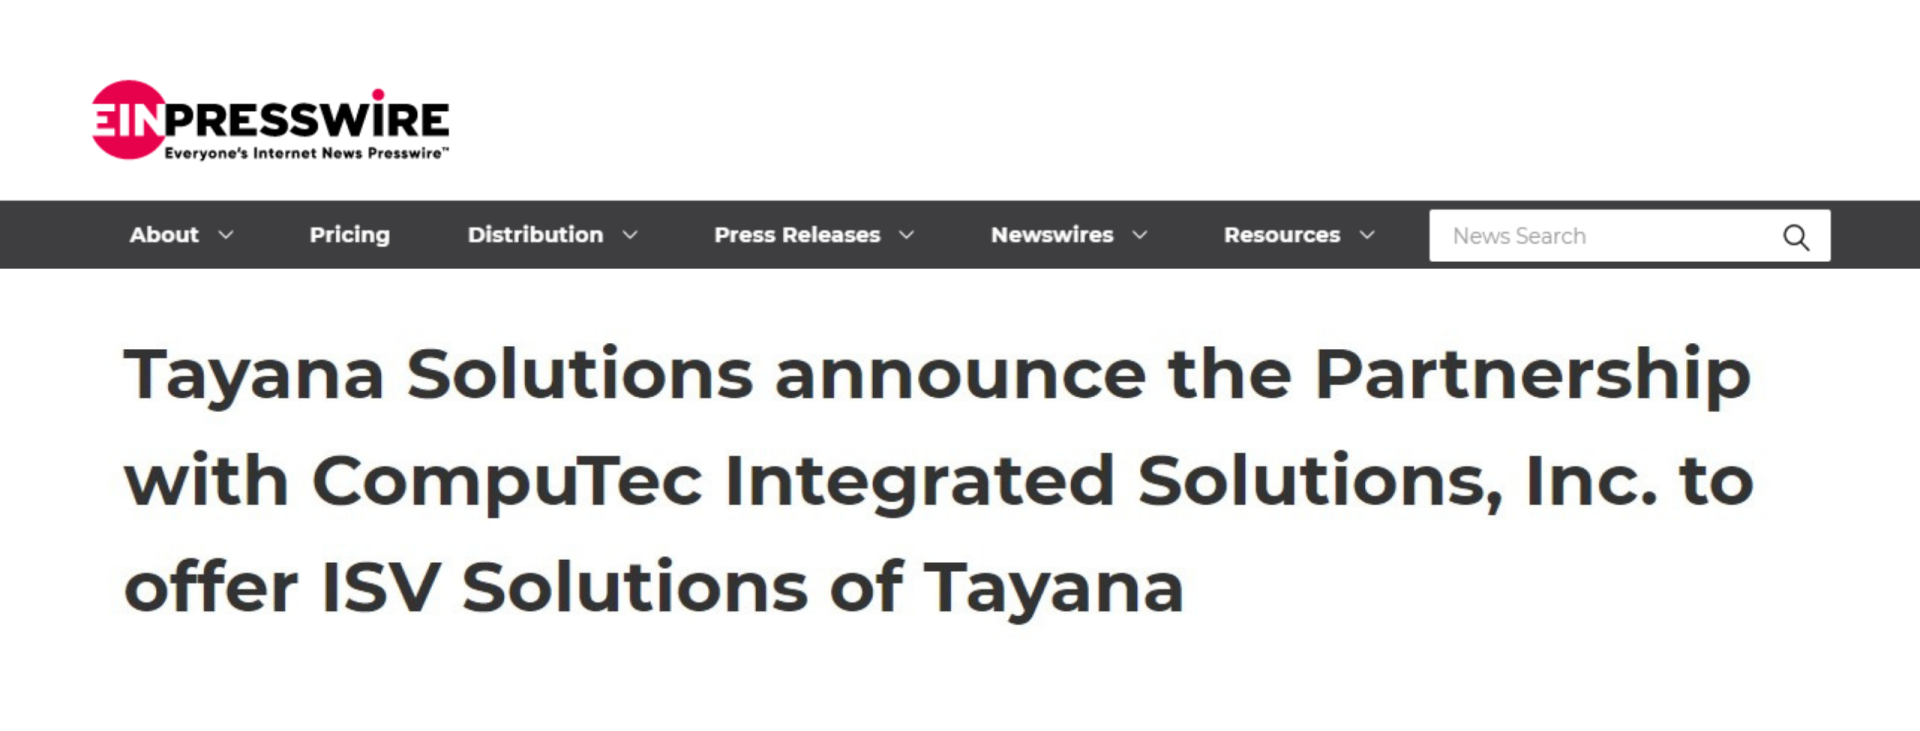 Tayana's News Forum